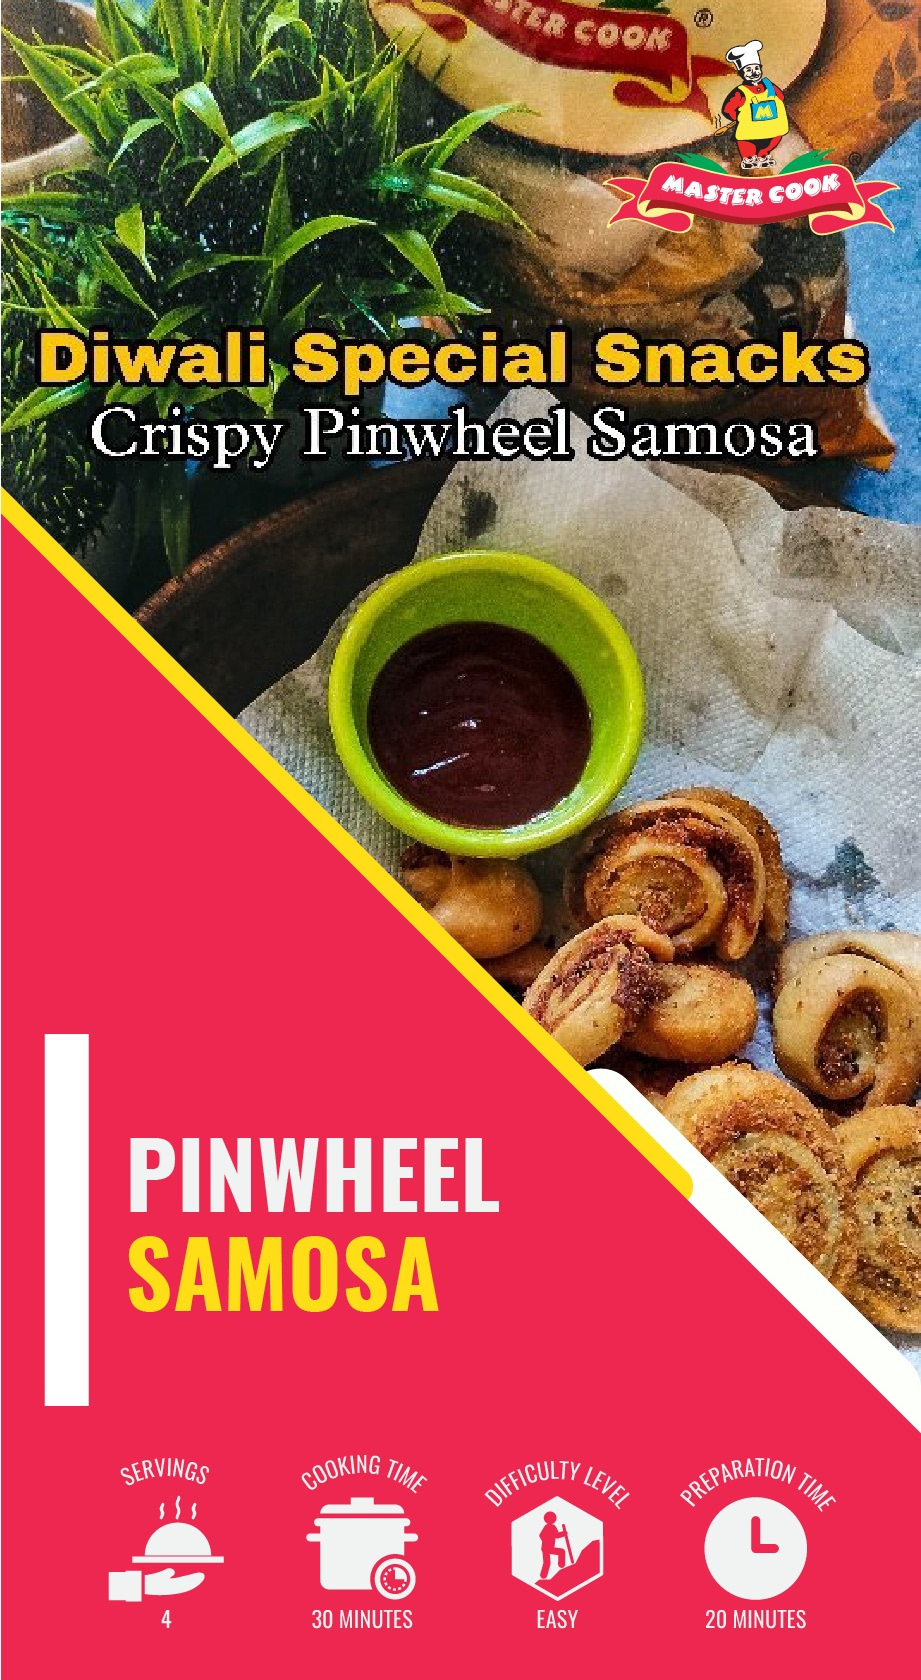 Pinwheel samosa